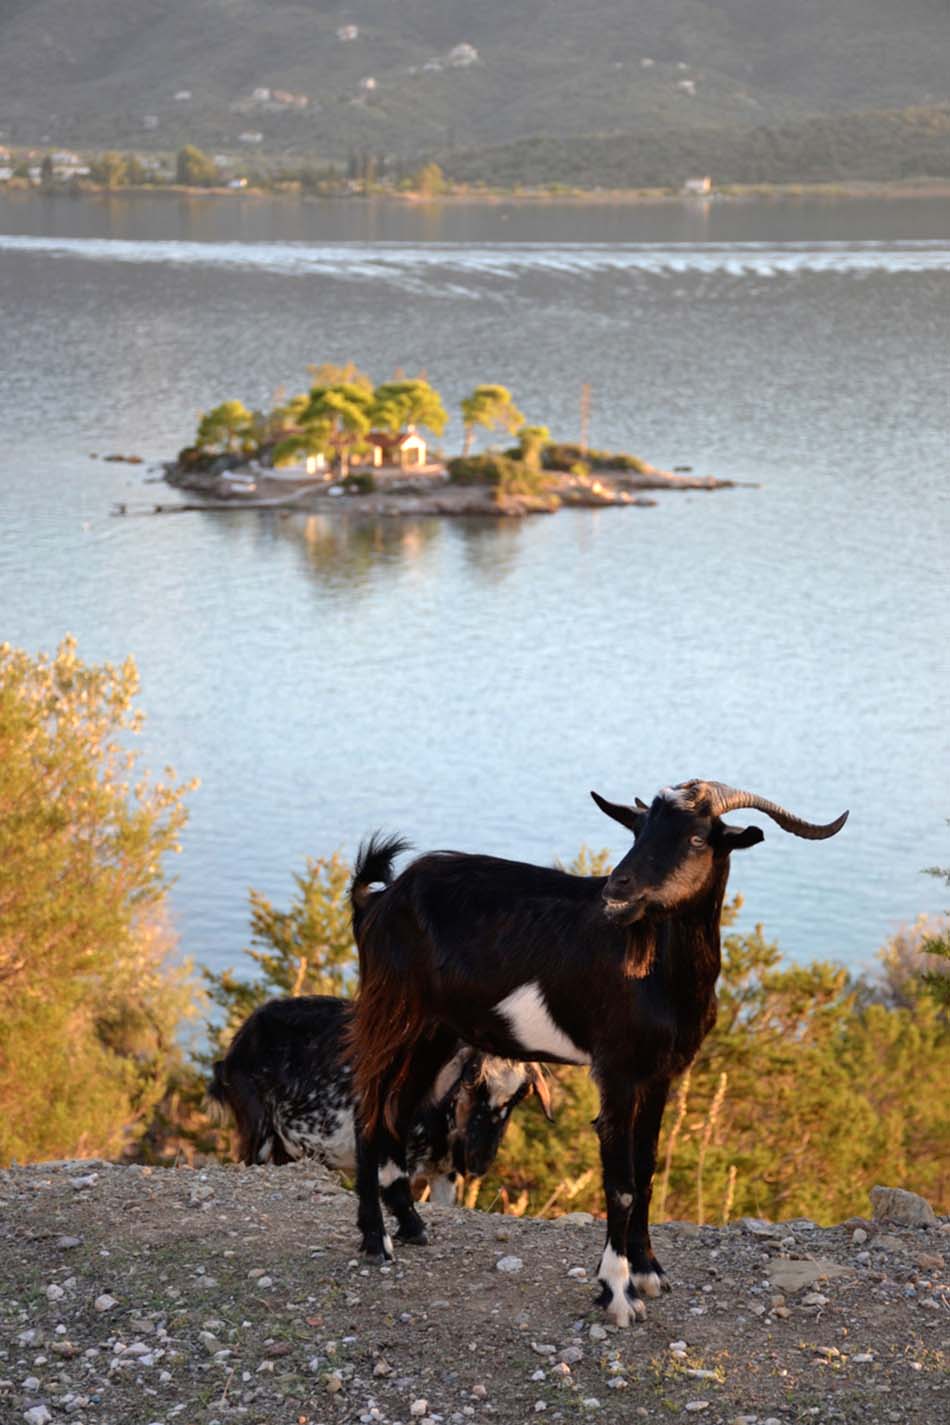 The goats of Poros